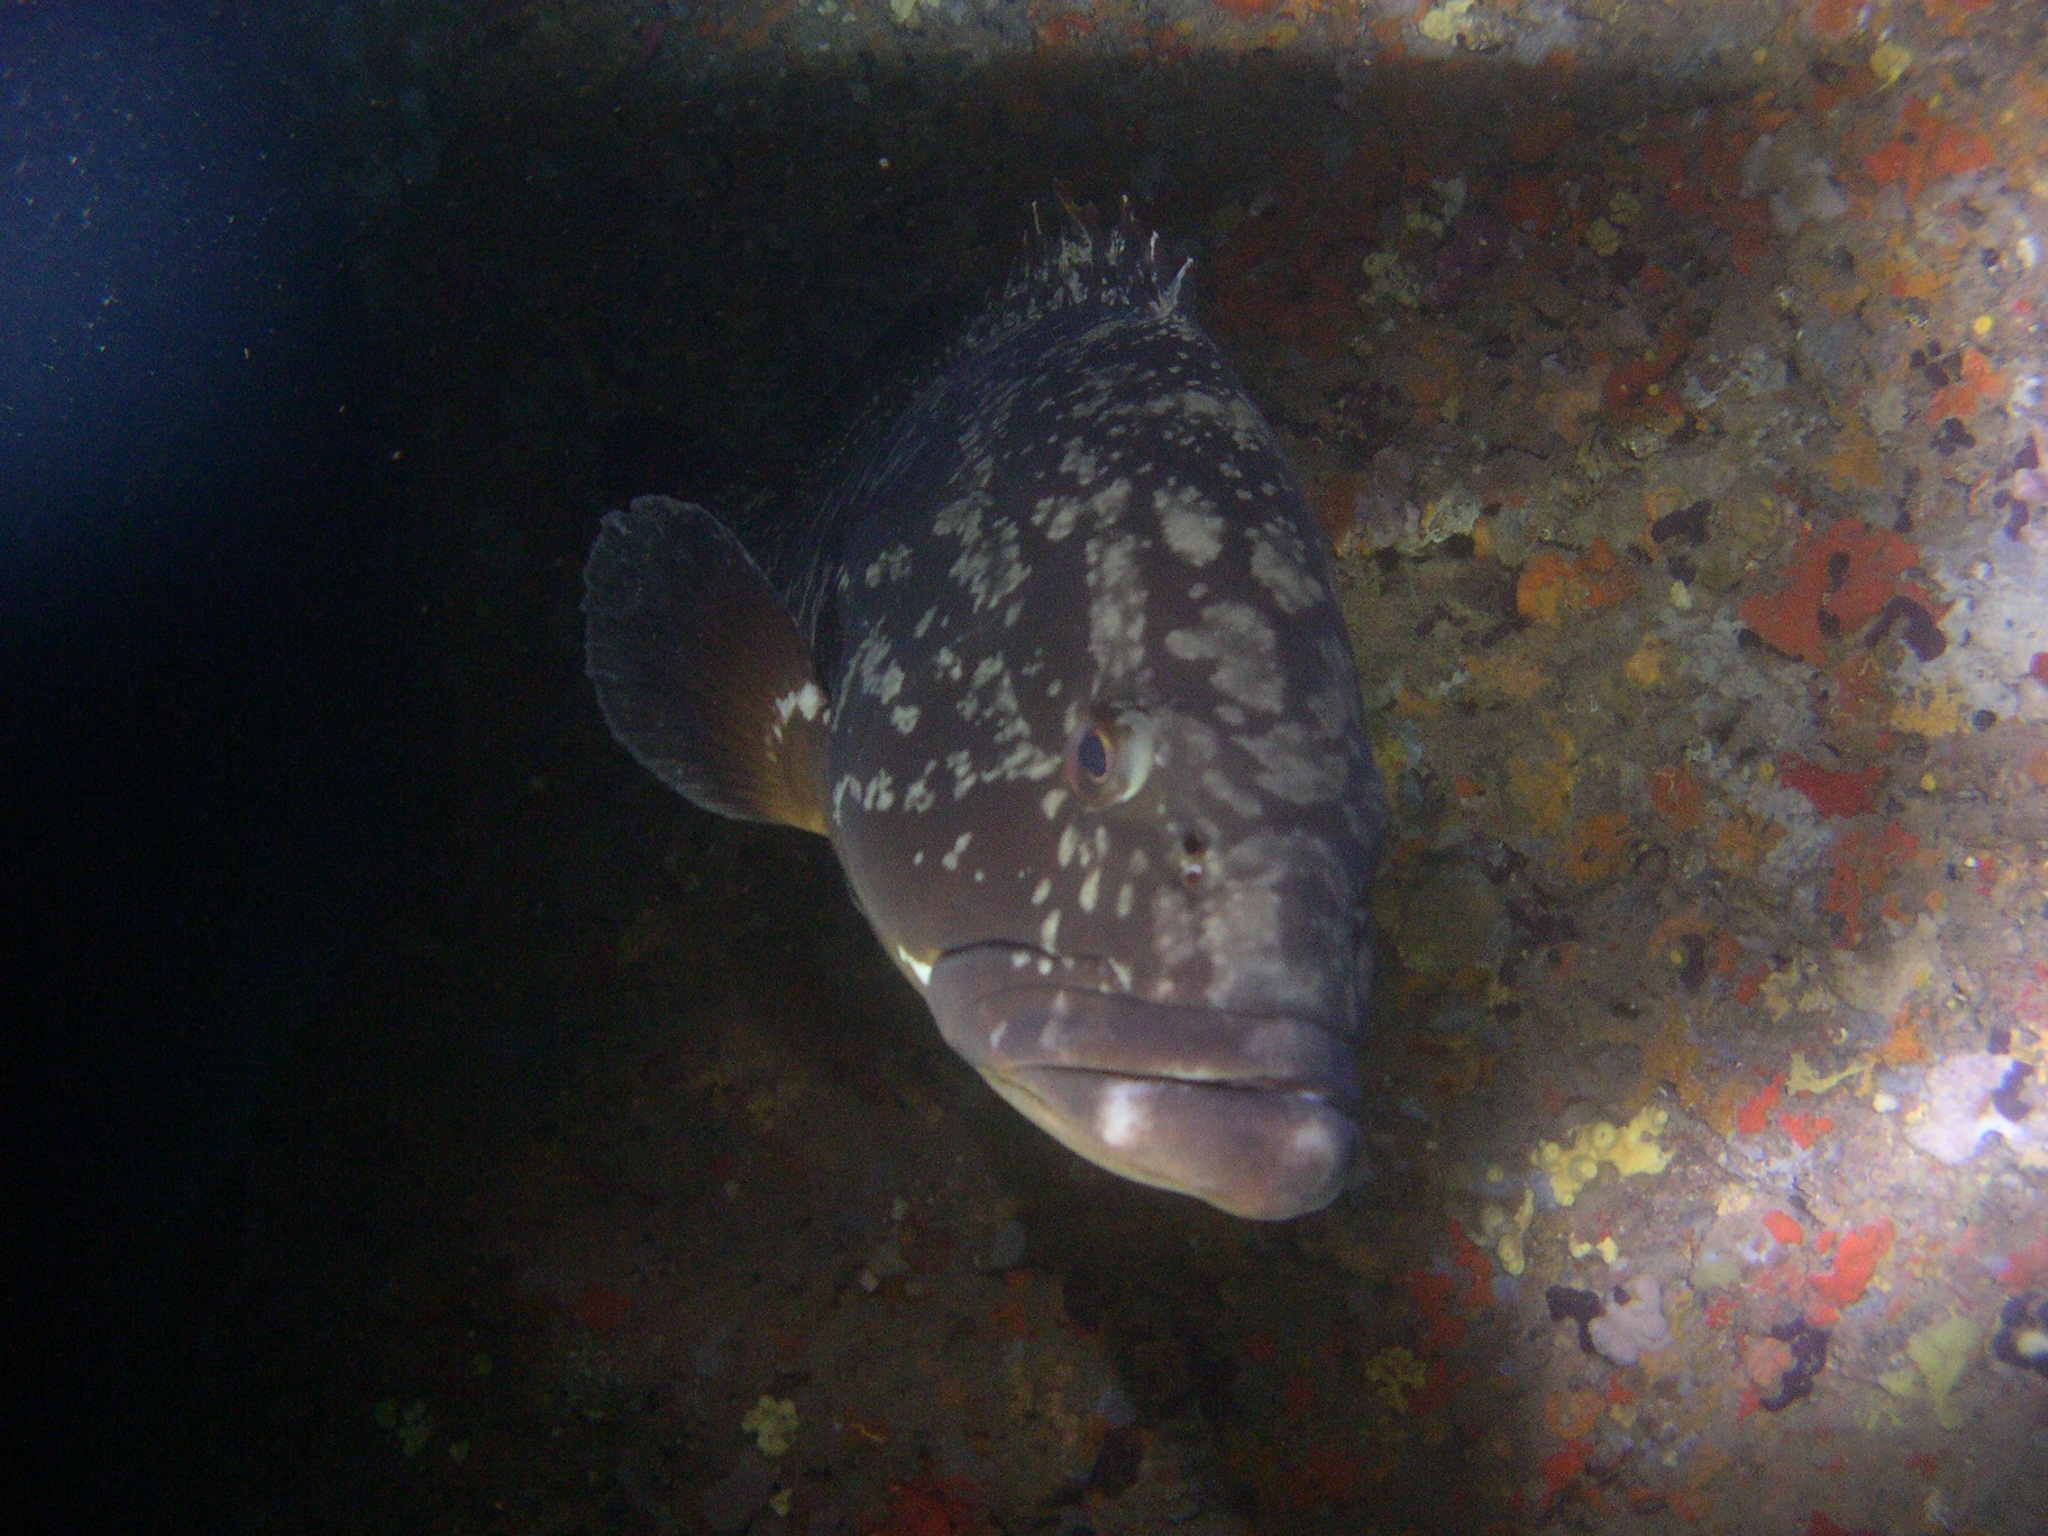 Friendly grouper